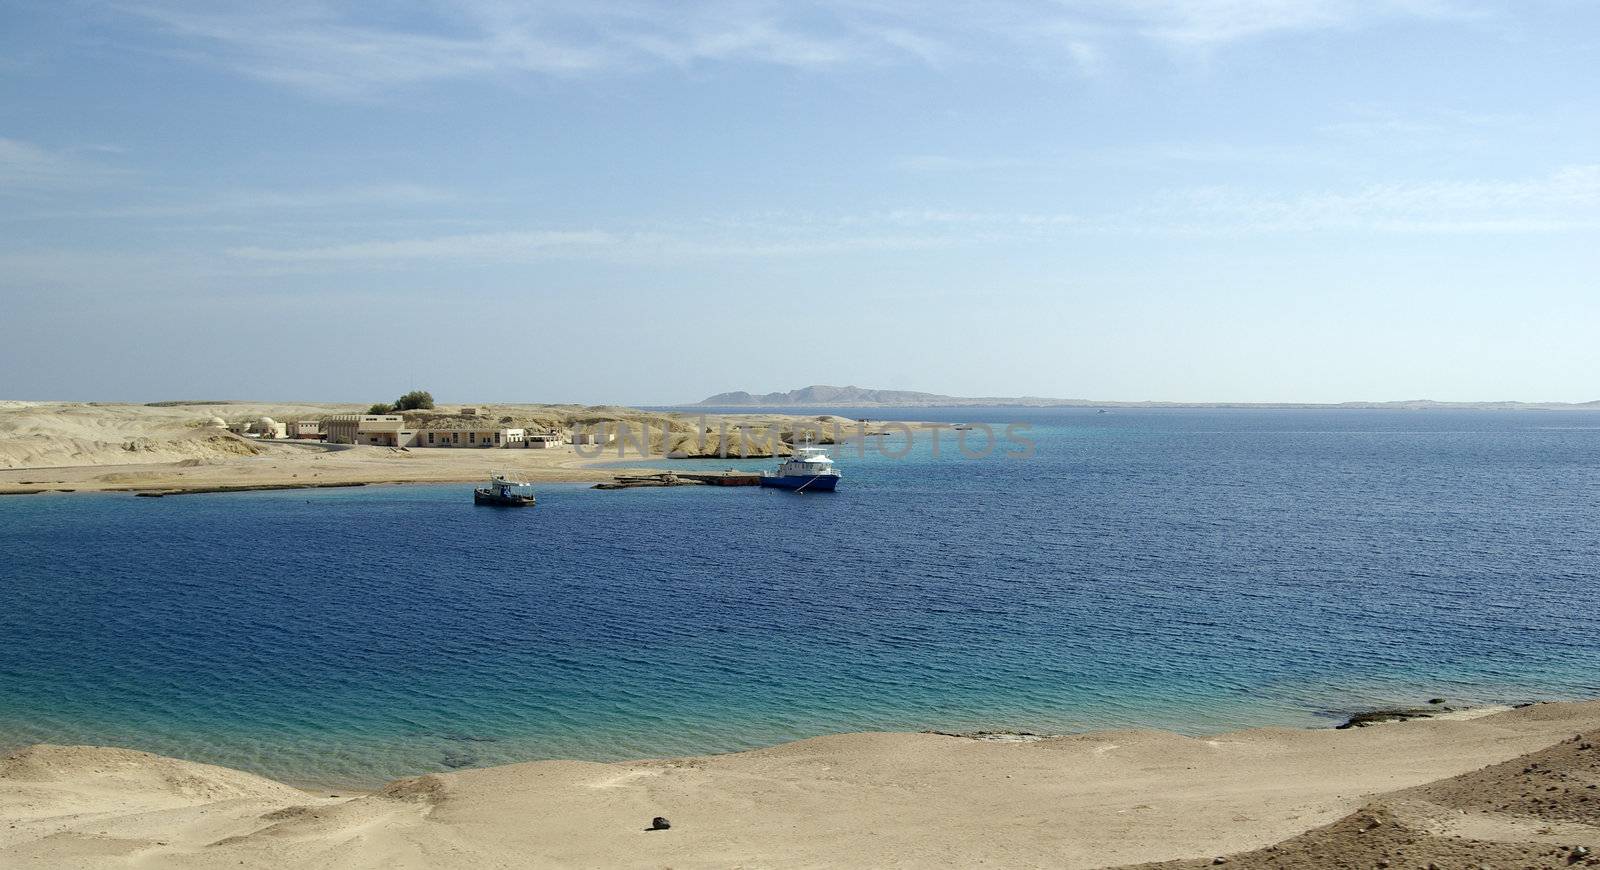 Ships in bay. Beatiful seascape in egyptian desert. Red sea, Egy by borodaev